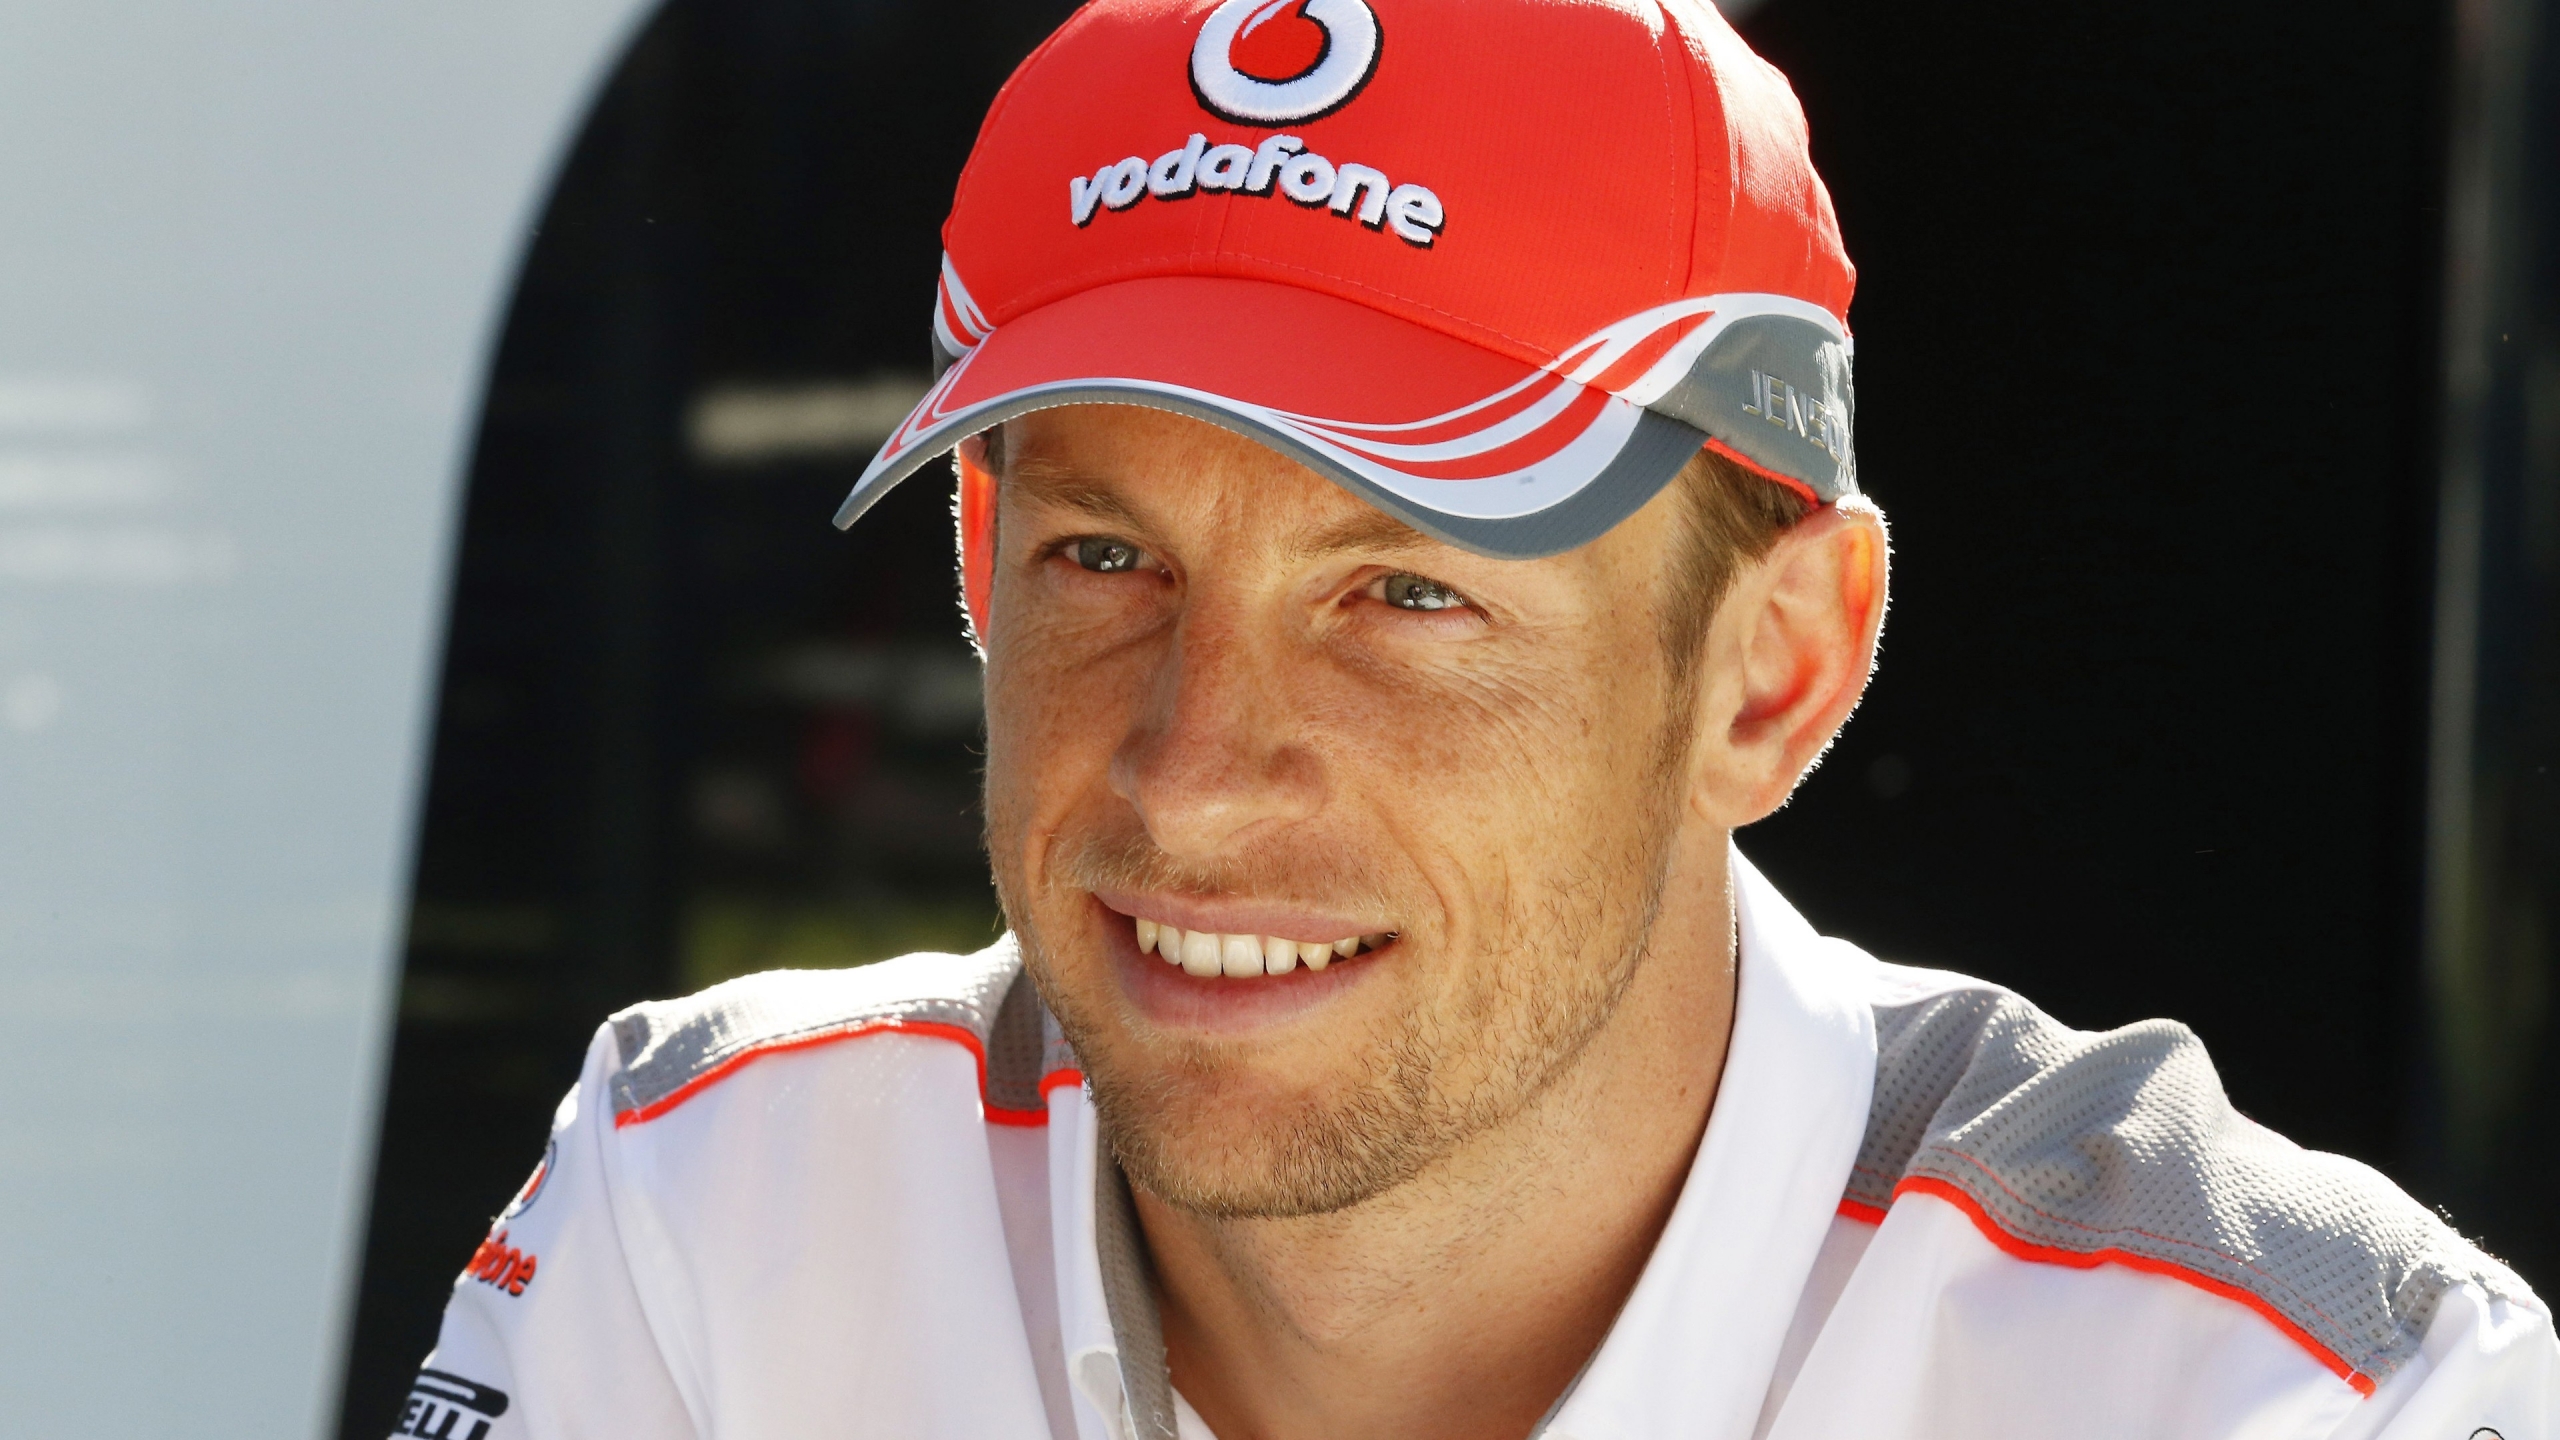 Jenson Button Vodafone for 2560x1440 HDTV resolution